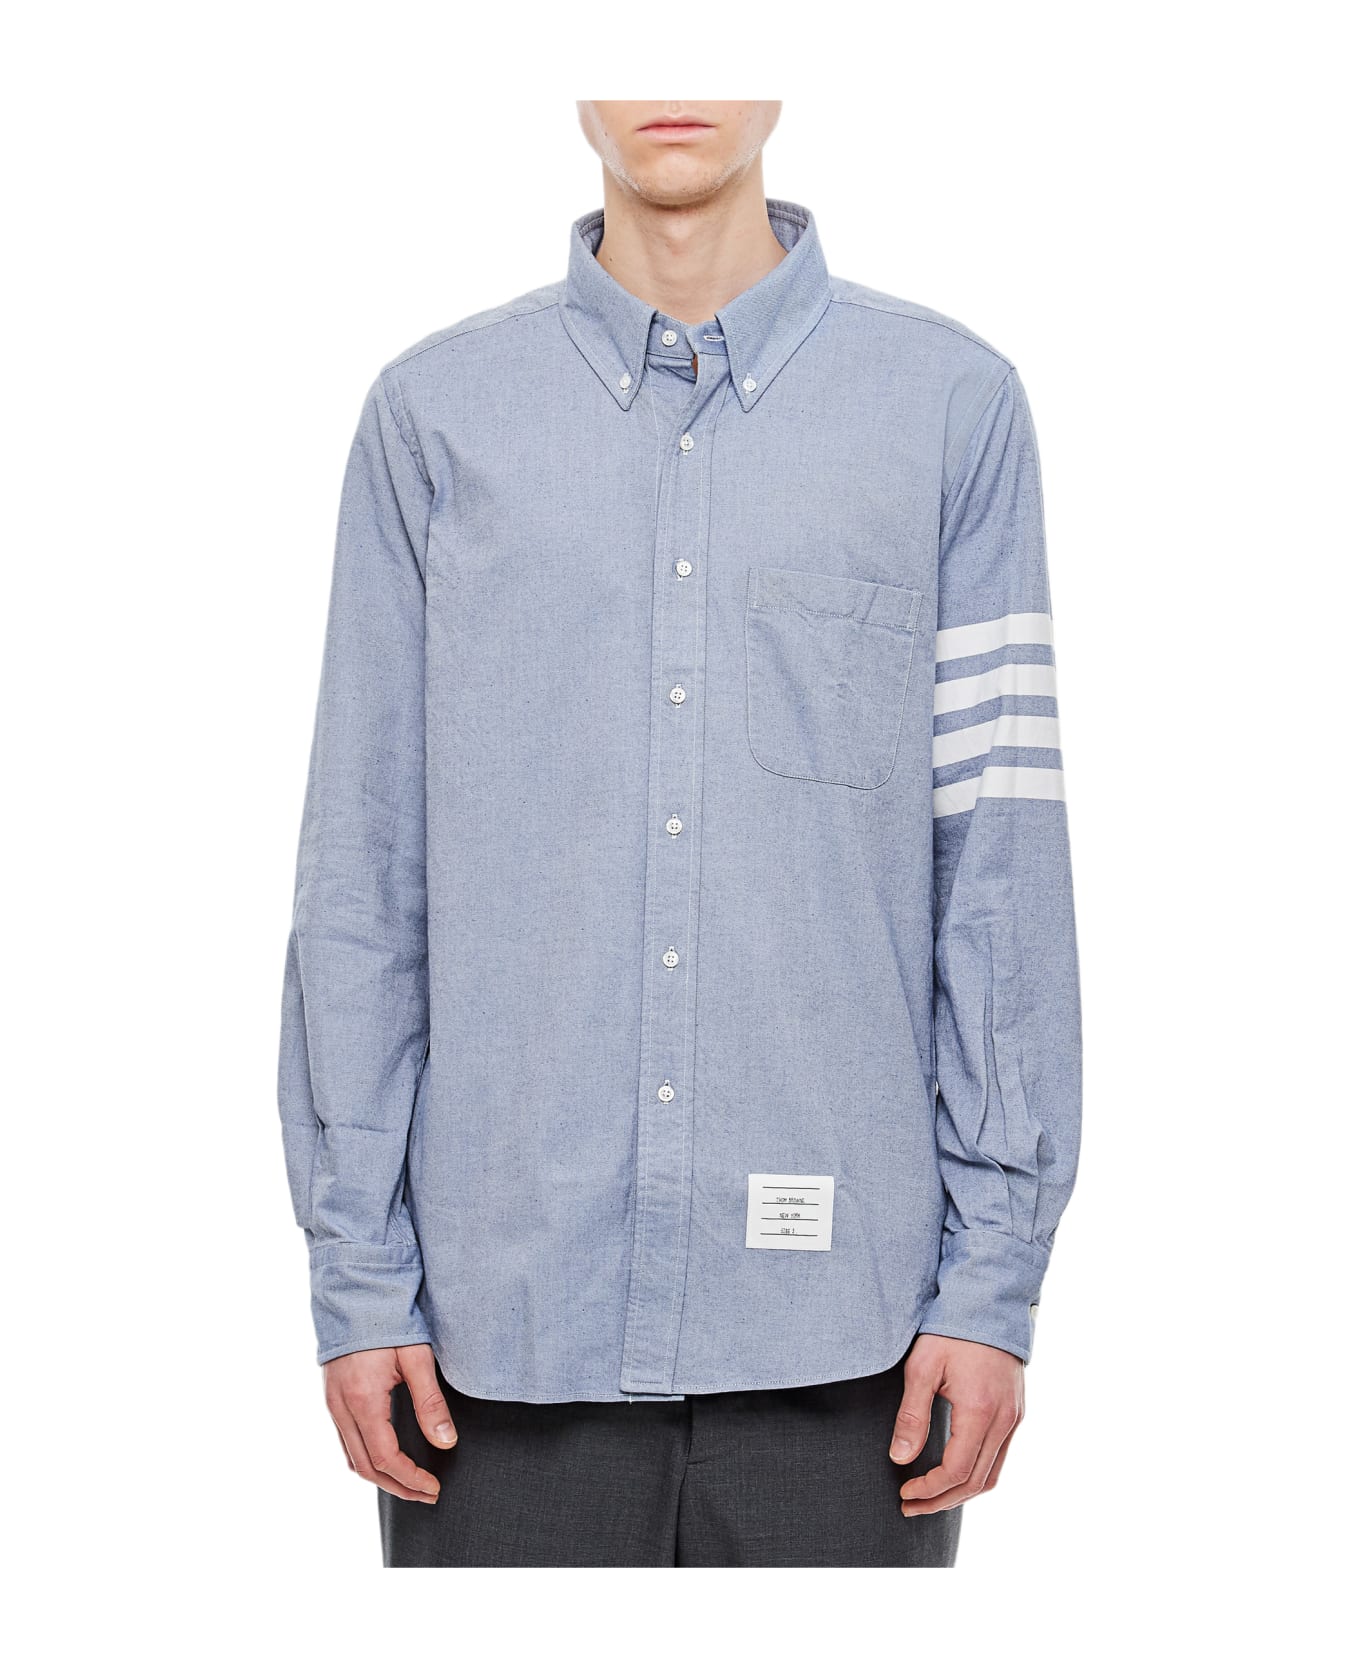 Thom Browne Straight Fit Shirt W/ Tonal 4 Bar In Flannel - Light blue